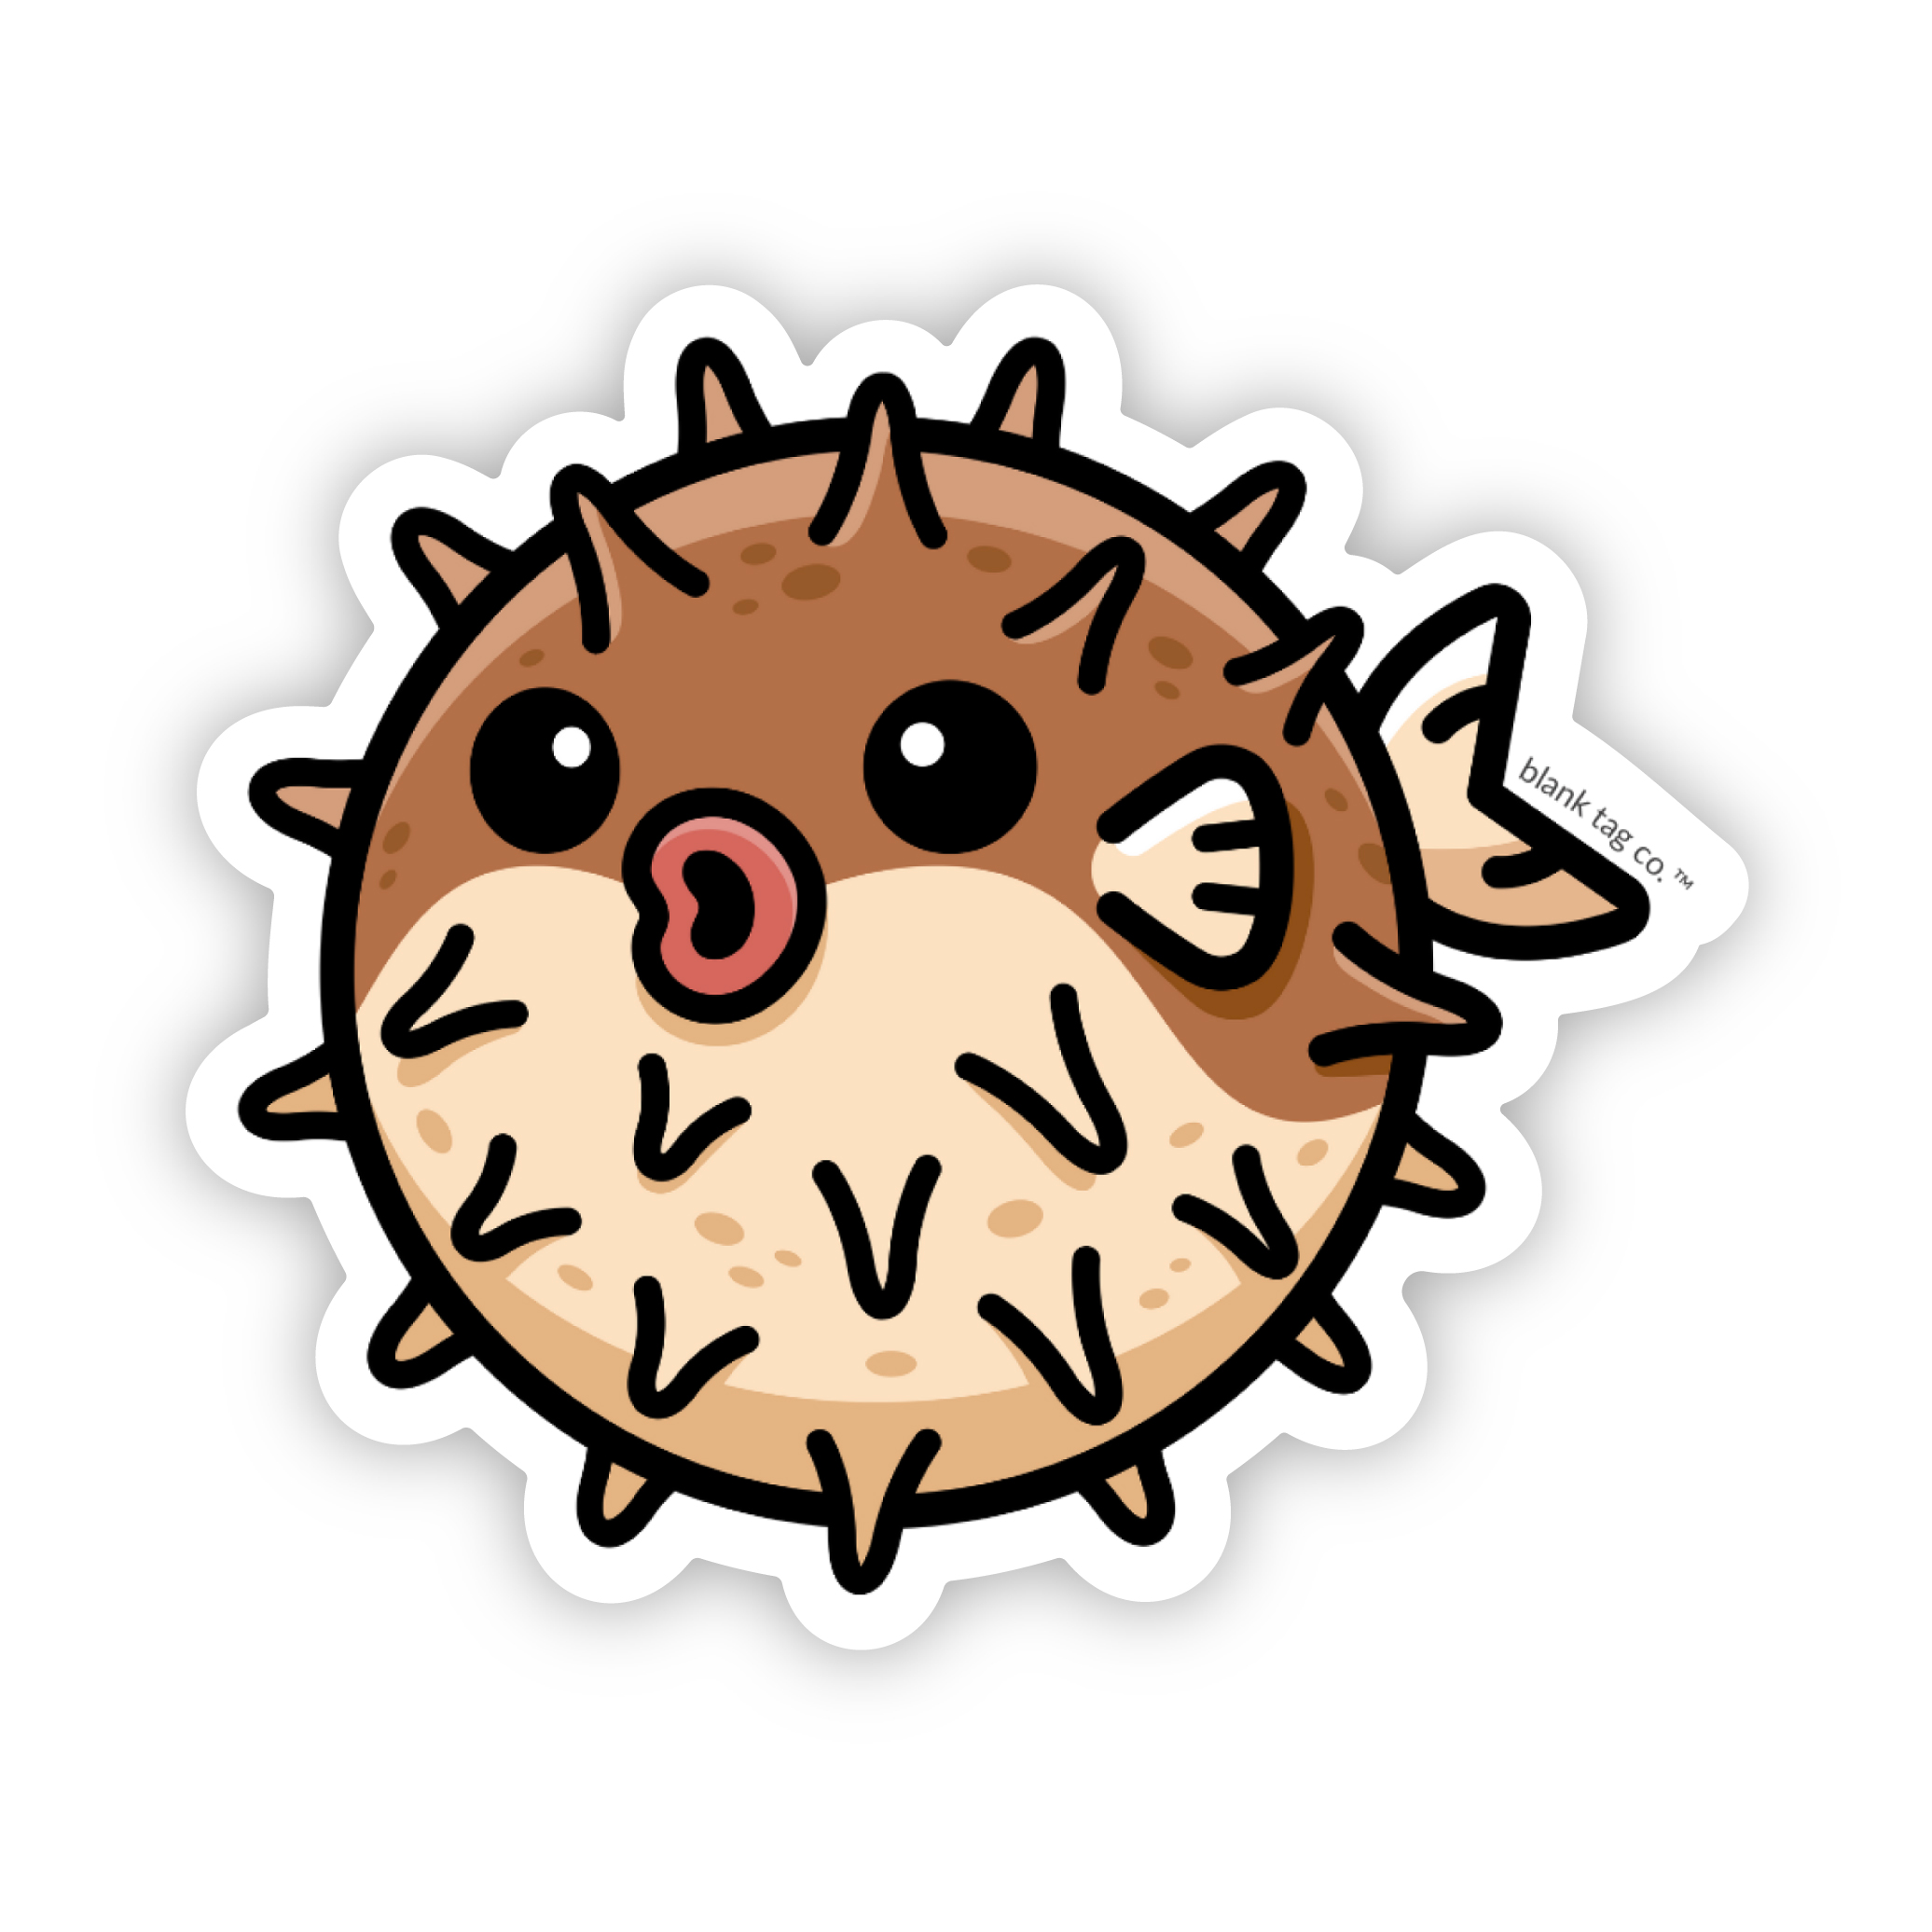 The Pufferfish Sticker